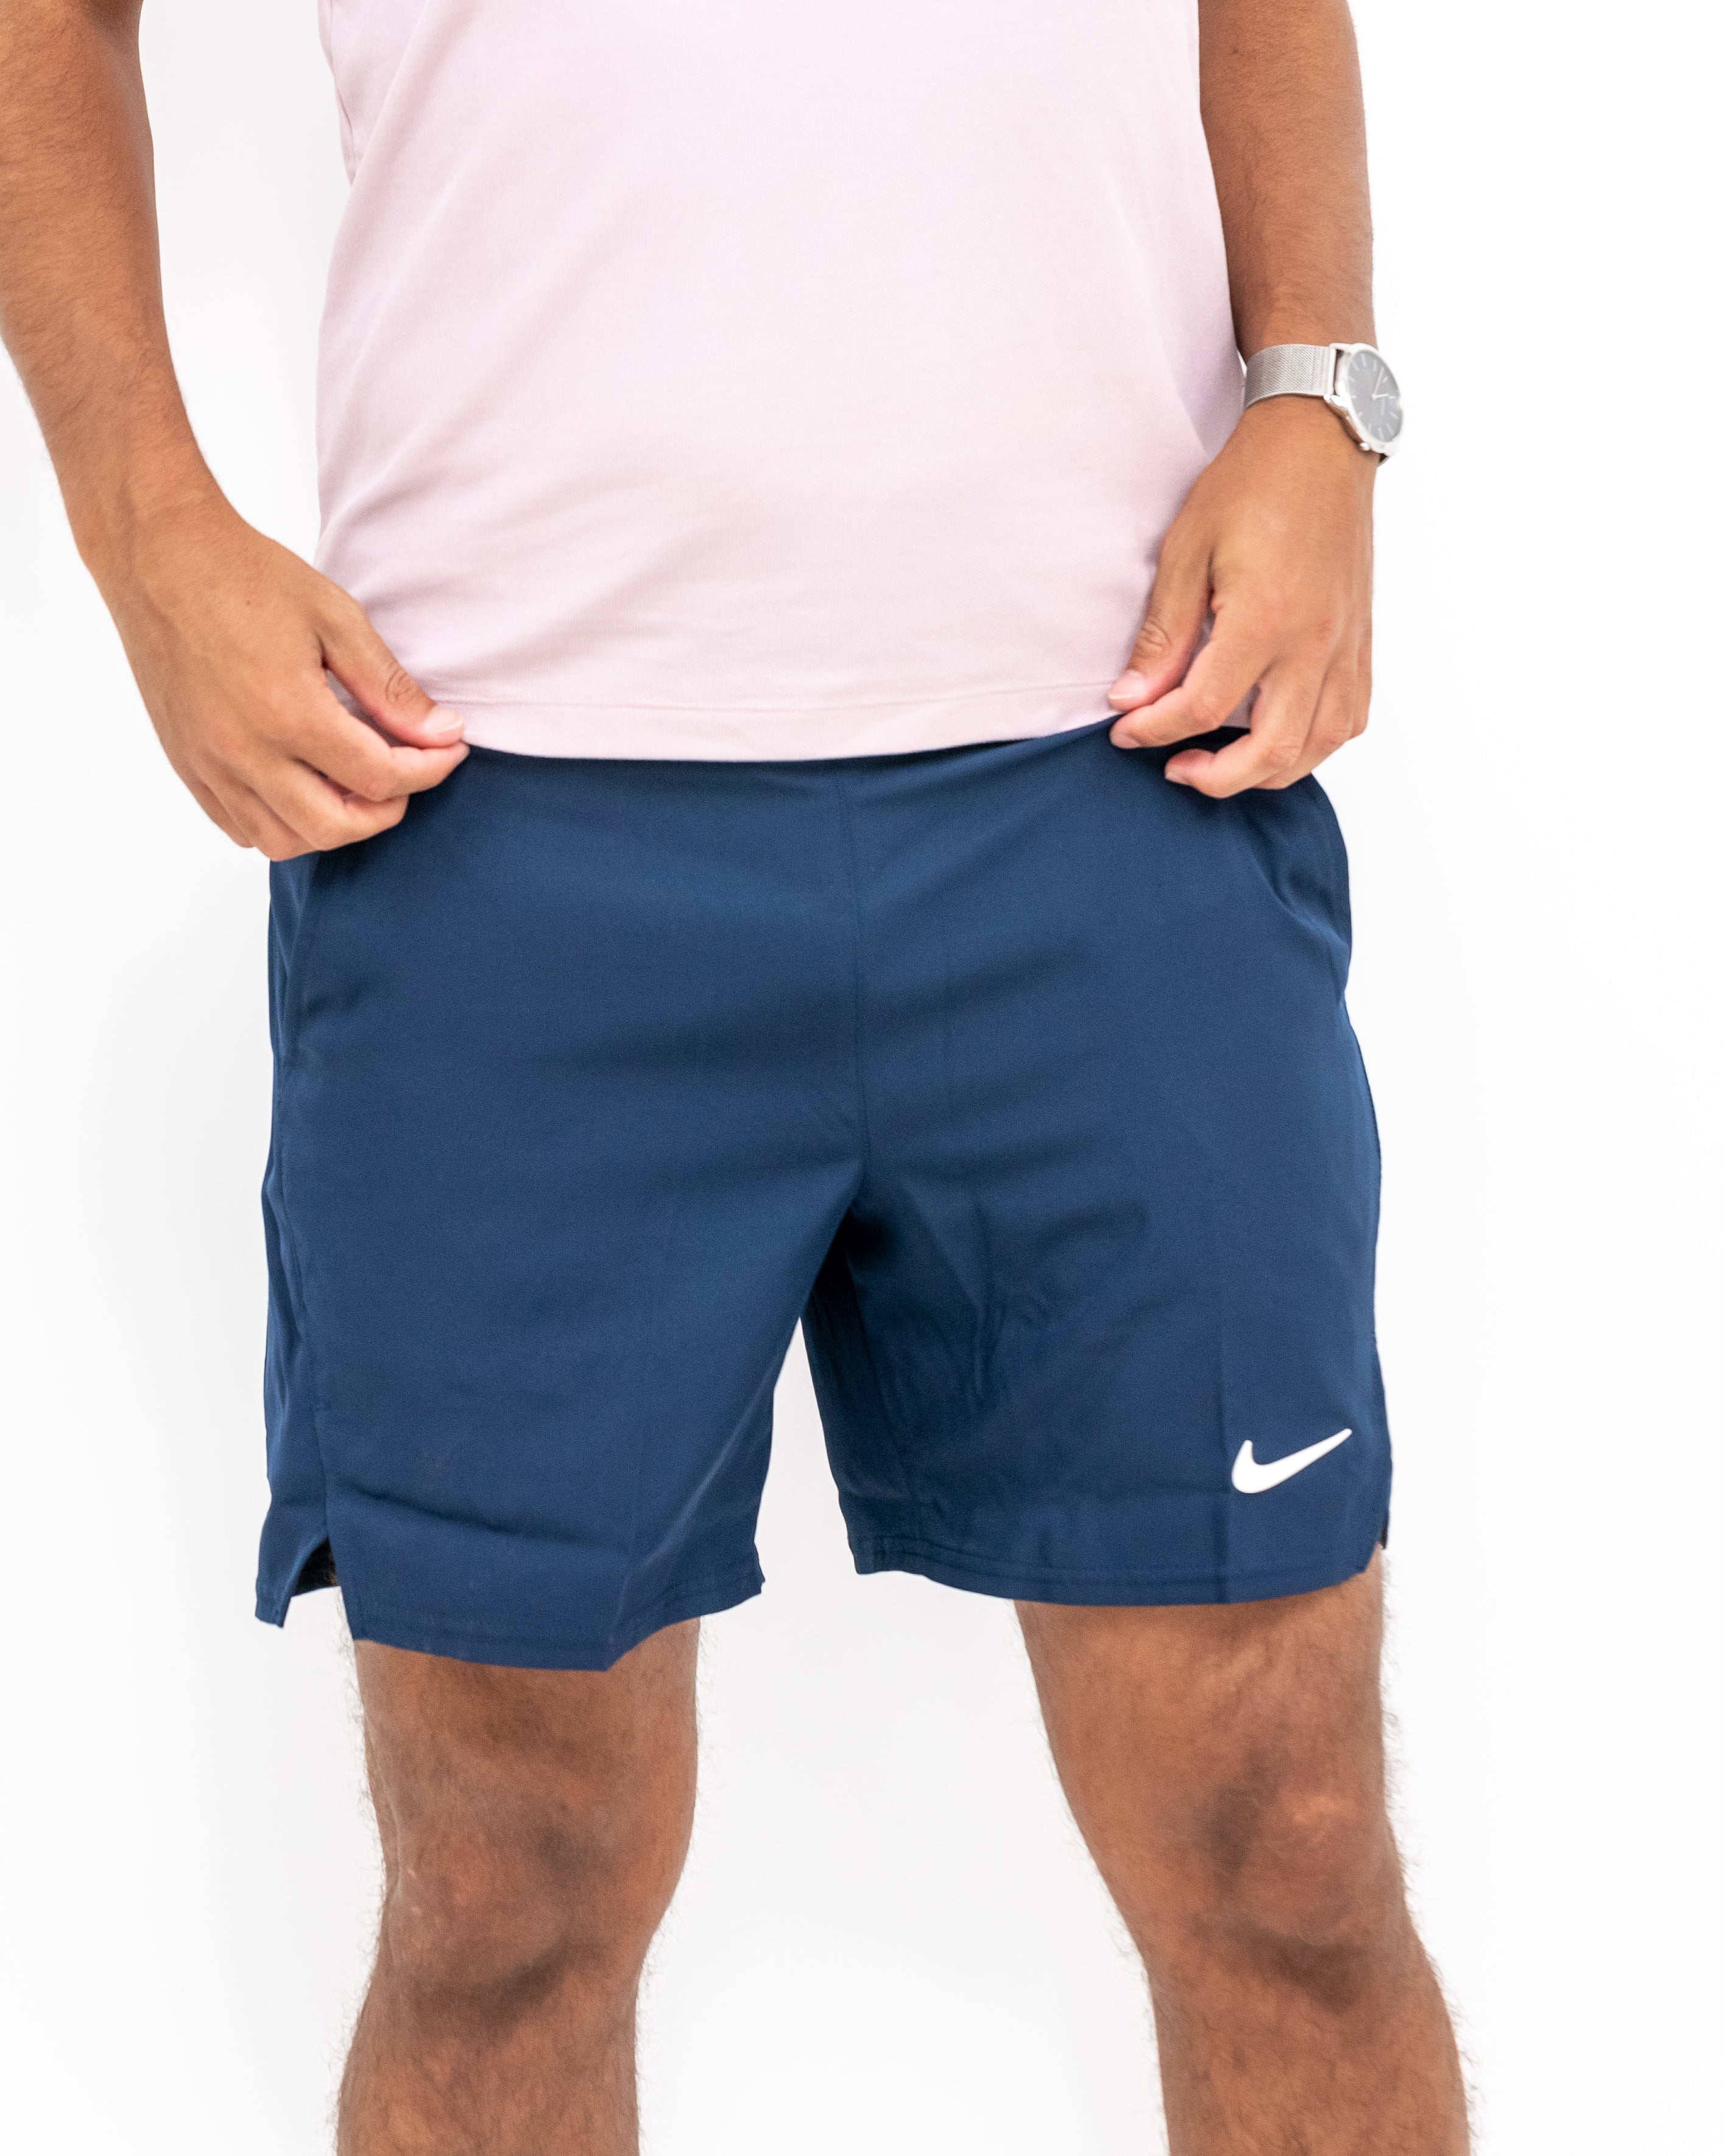 Court DRI-FIT Advantage 7IN Shorts